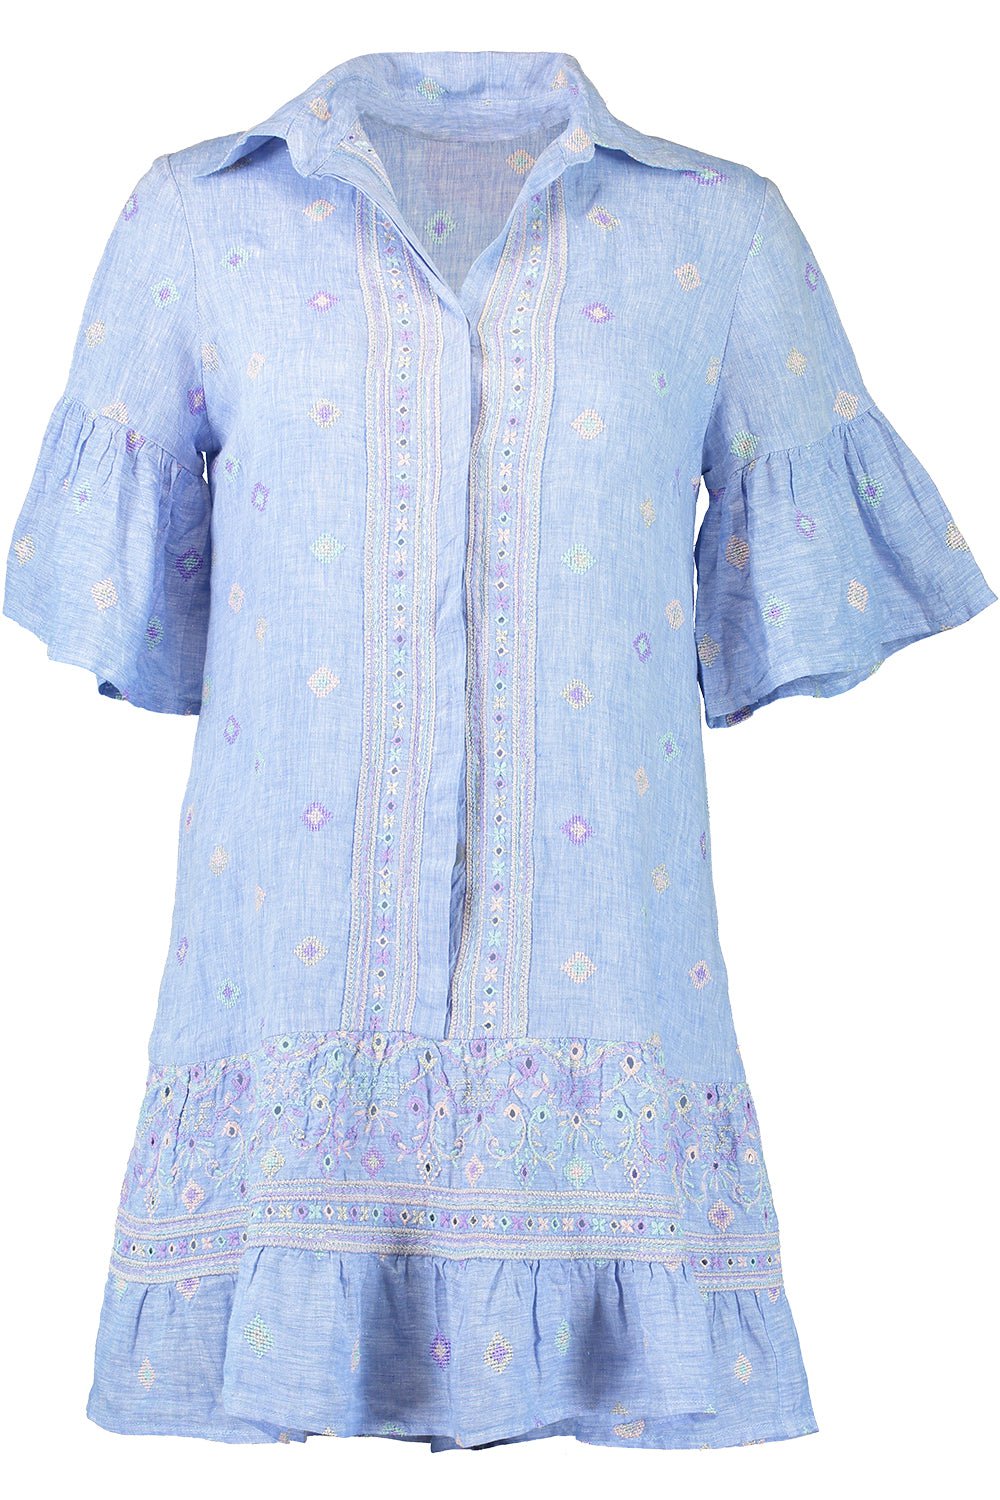 TEMPTATION POSITANO-Embroidered Button Shirt Dress-